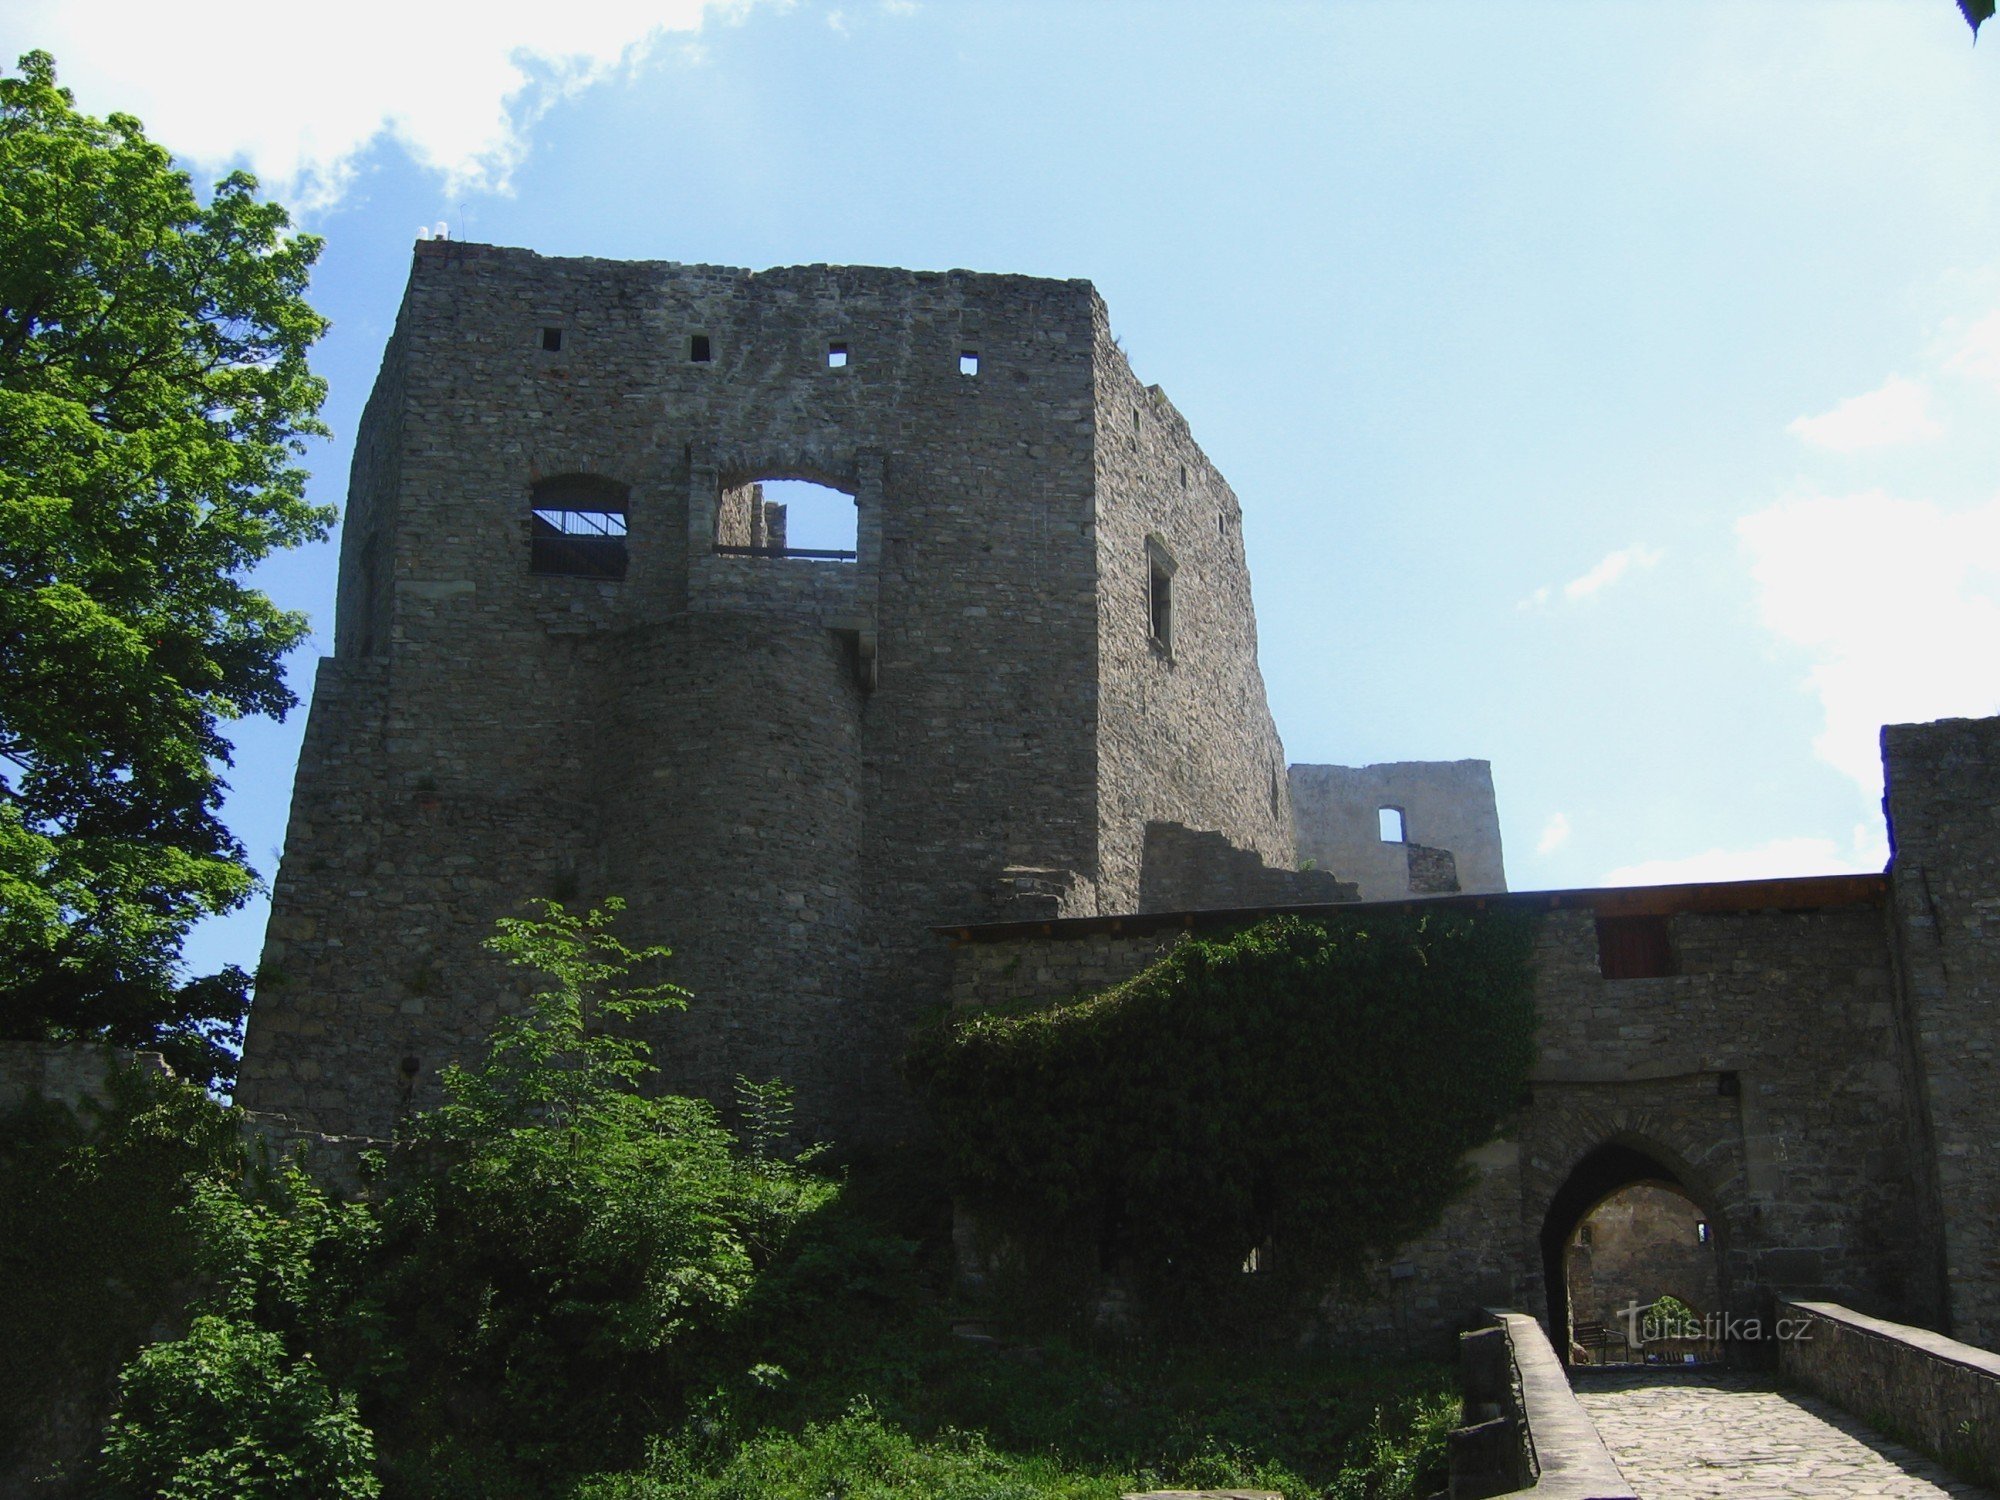 Dvorac Hukvaldy